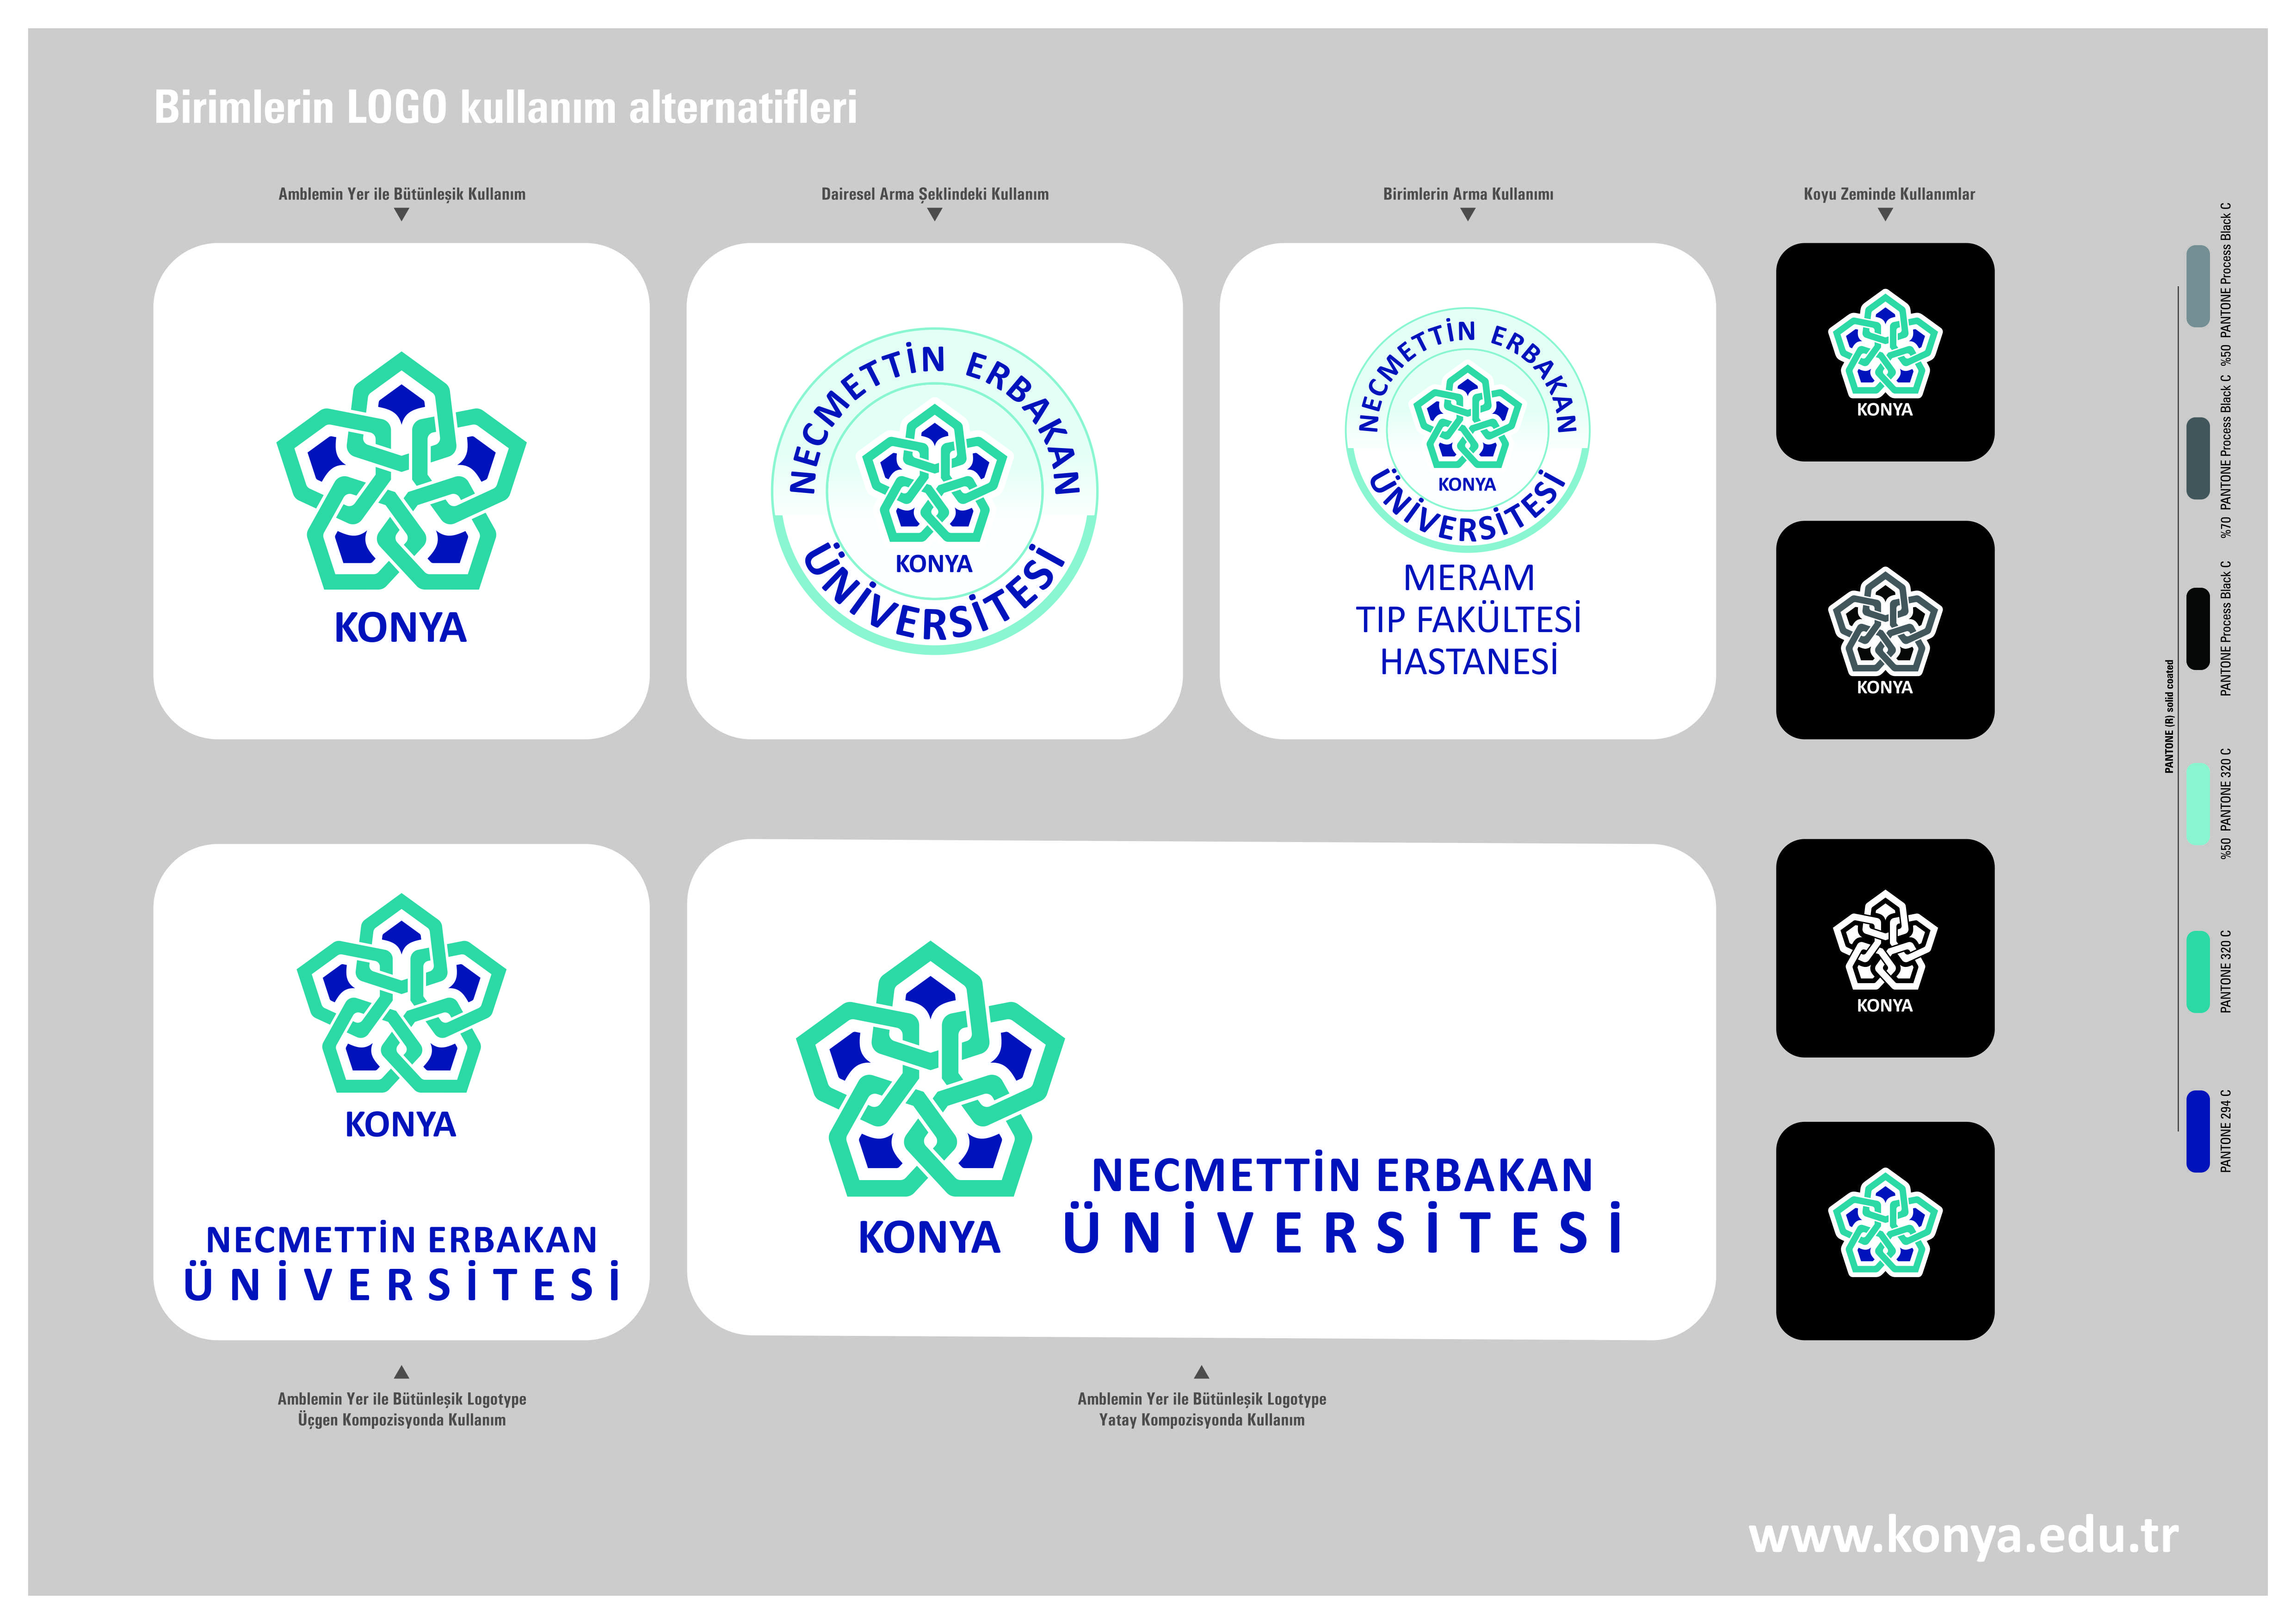 Necmettin Erbakan Üniversitesi Logo photo - 1